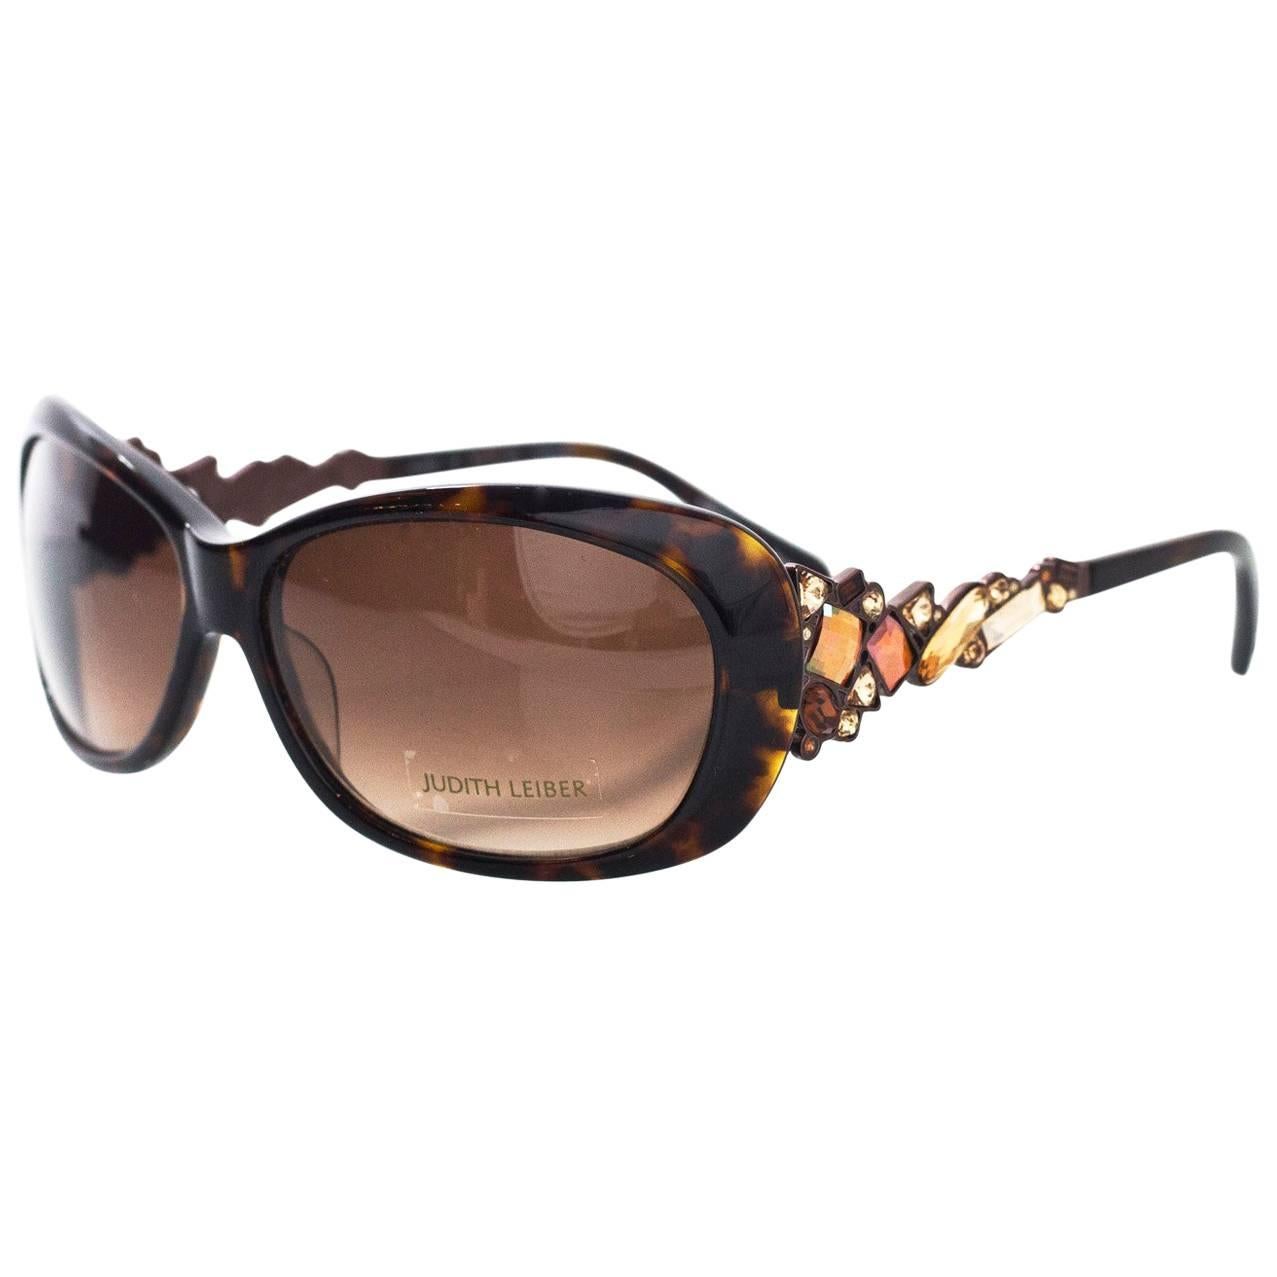 Judith Leiber JL1619 Brown Tortoise Swarovski Crystal Sunglasses rt. $620